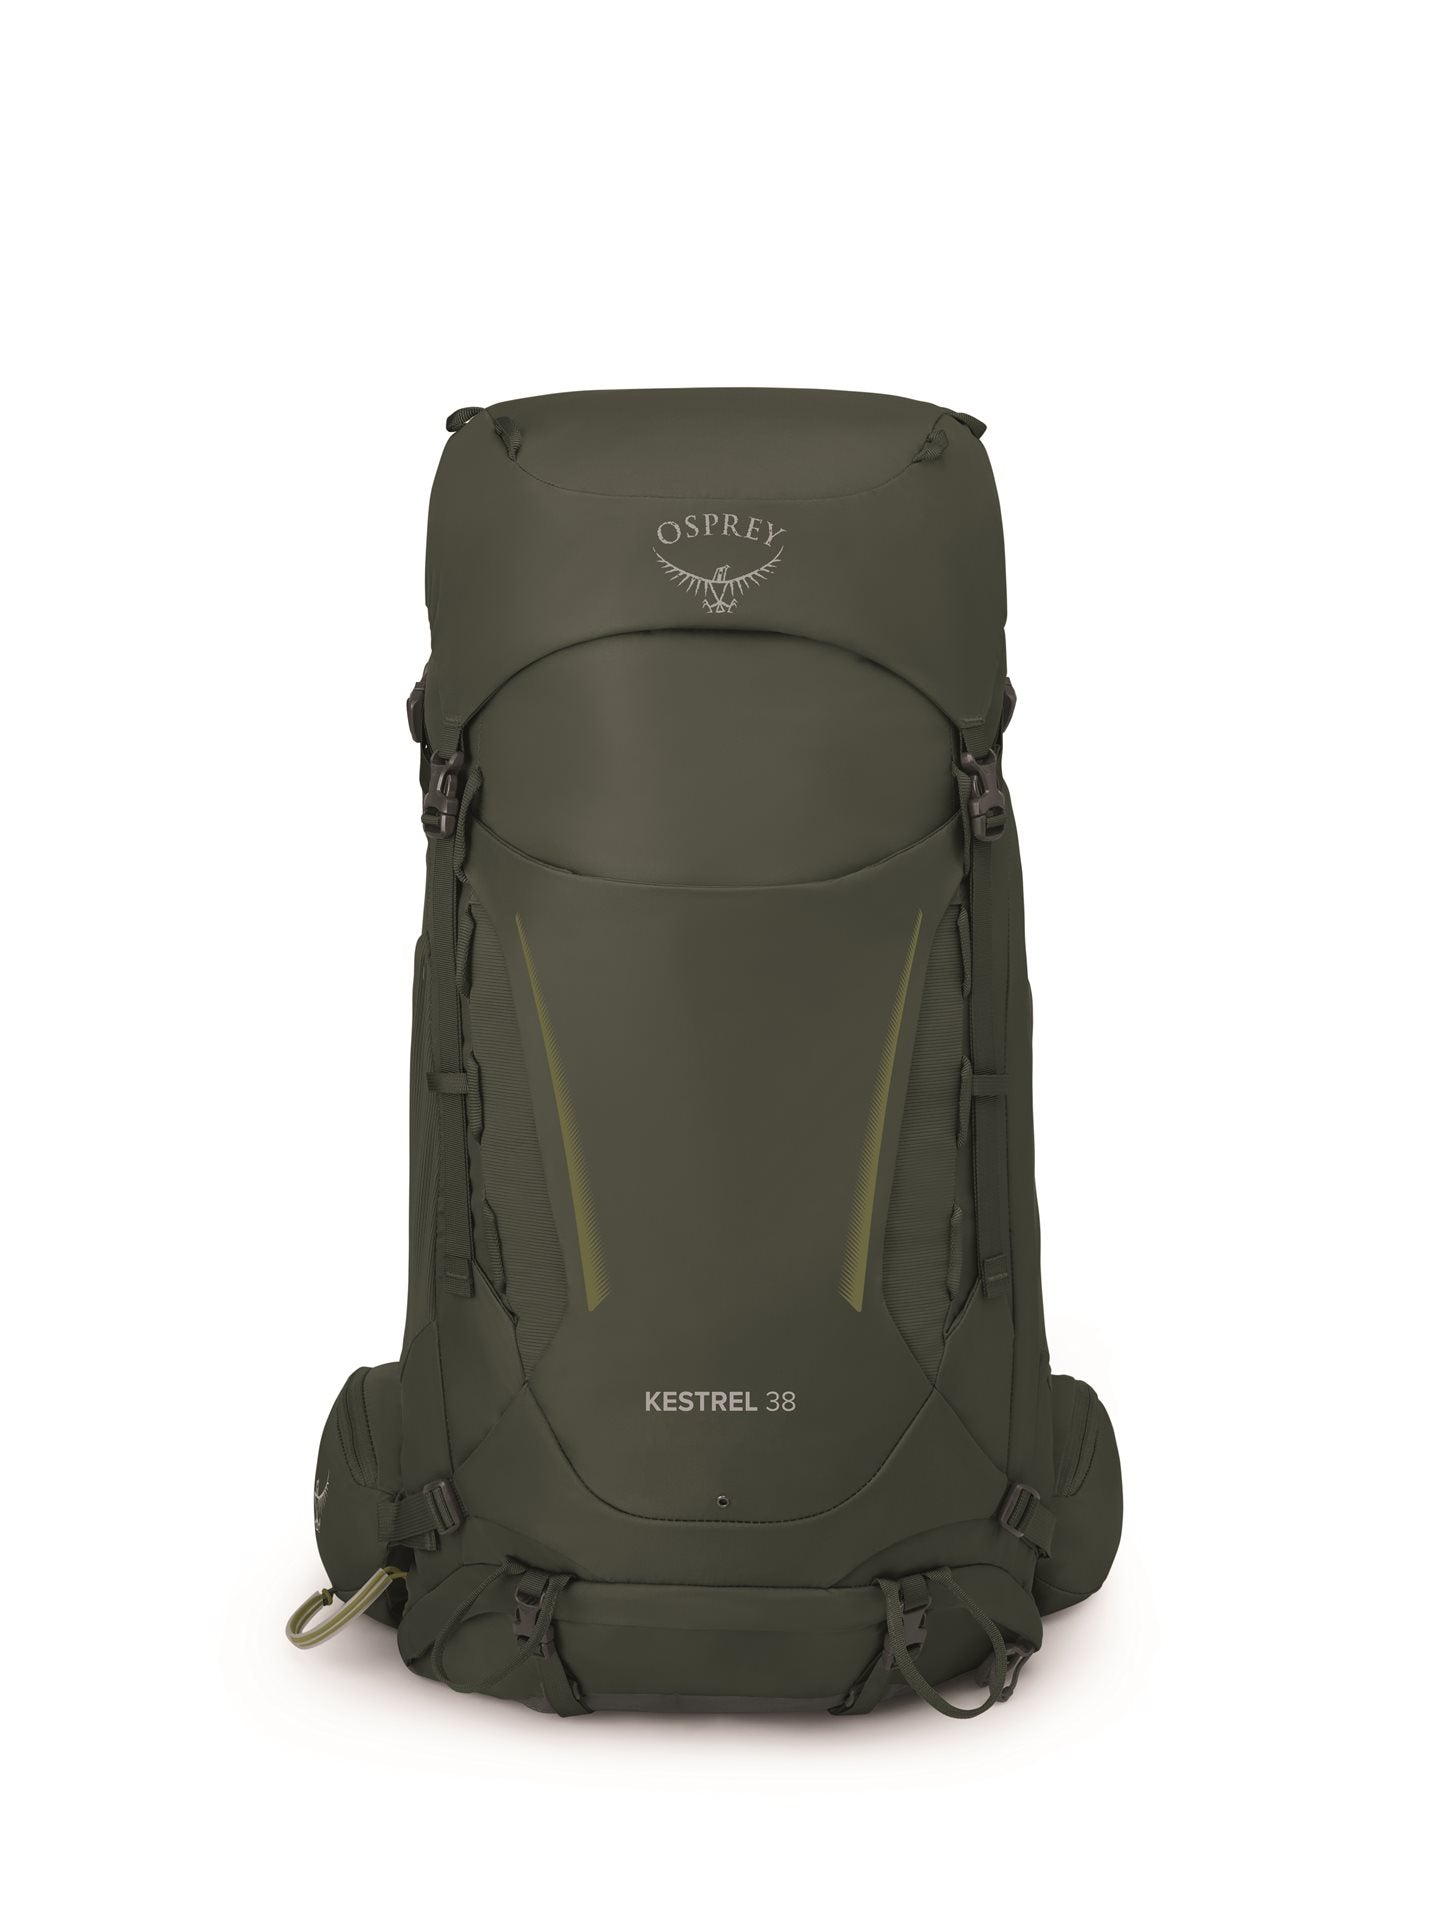 Osprey Kestrel Rugzak 38 Bonsai Green Backpack - Reisartikelen-nl